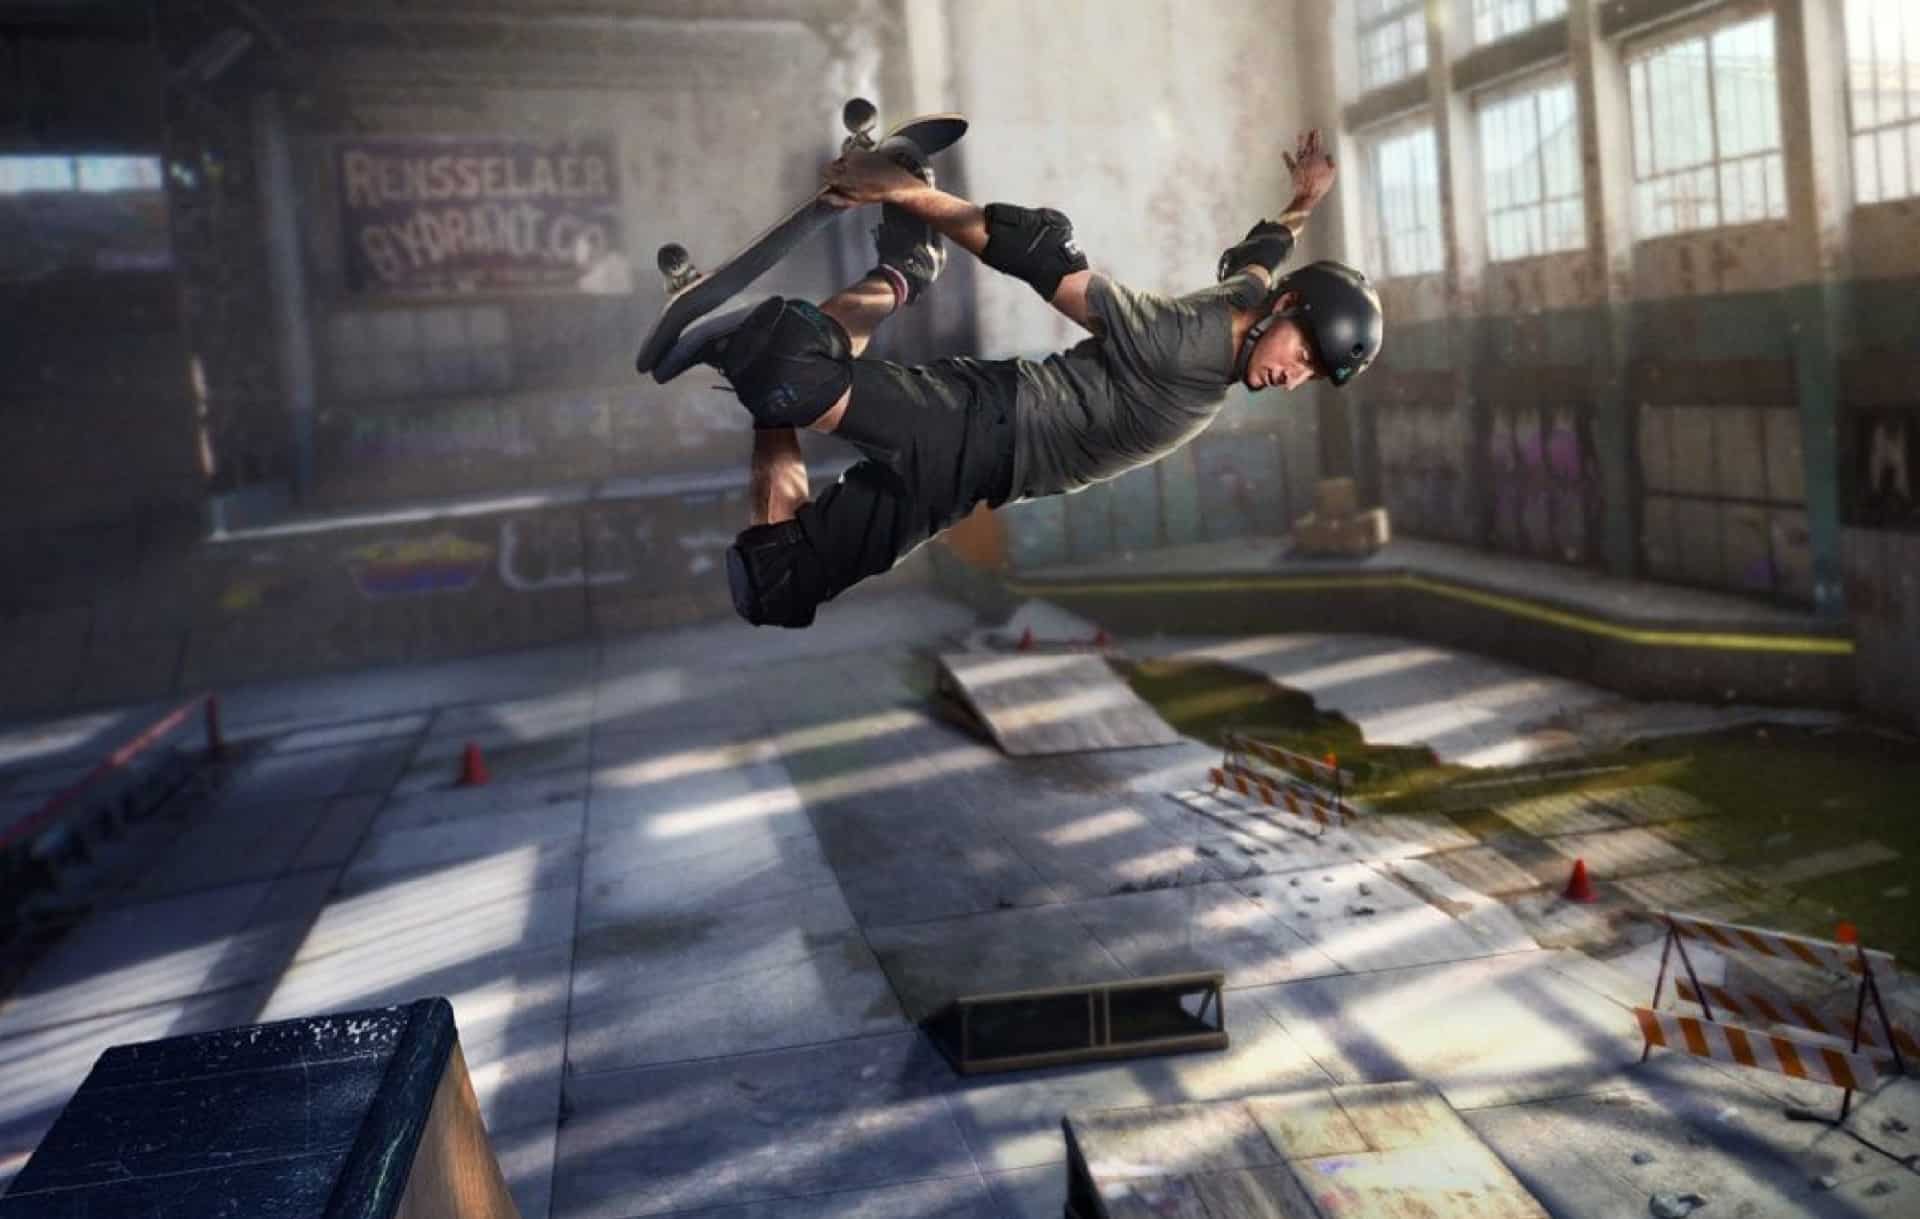 Tony Hawk Pro Skater 1 + 2, Crash Bandicoot N. Sane Trilogy, Vicarious Visions, Activision, Blizzard Entertainment, merge